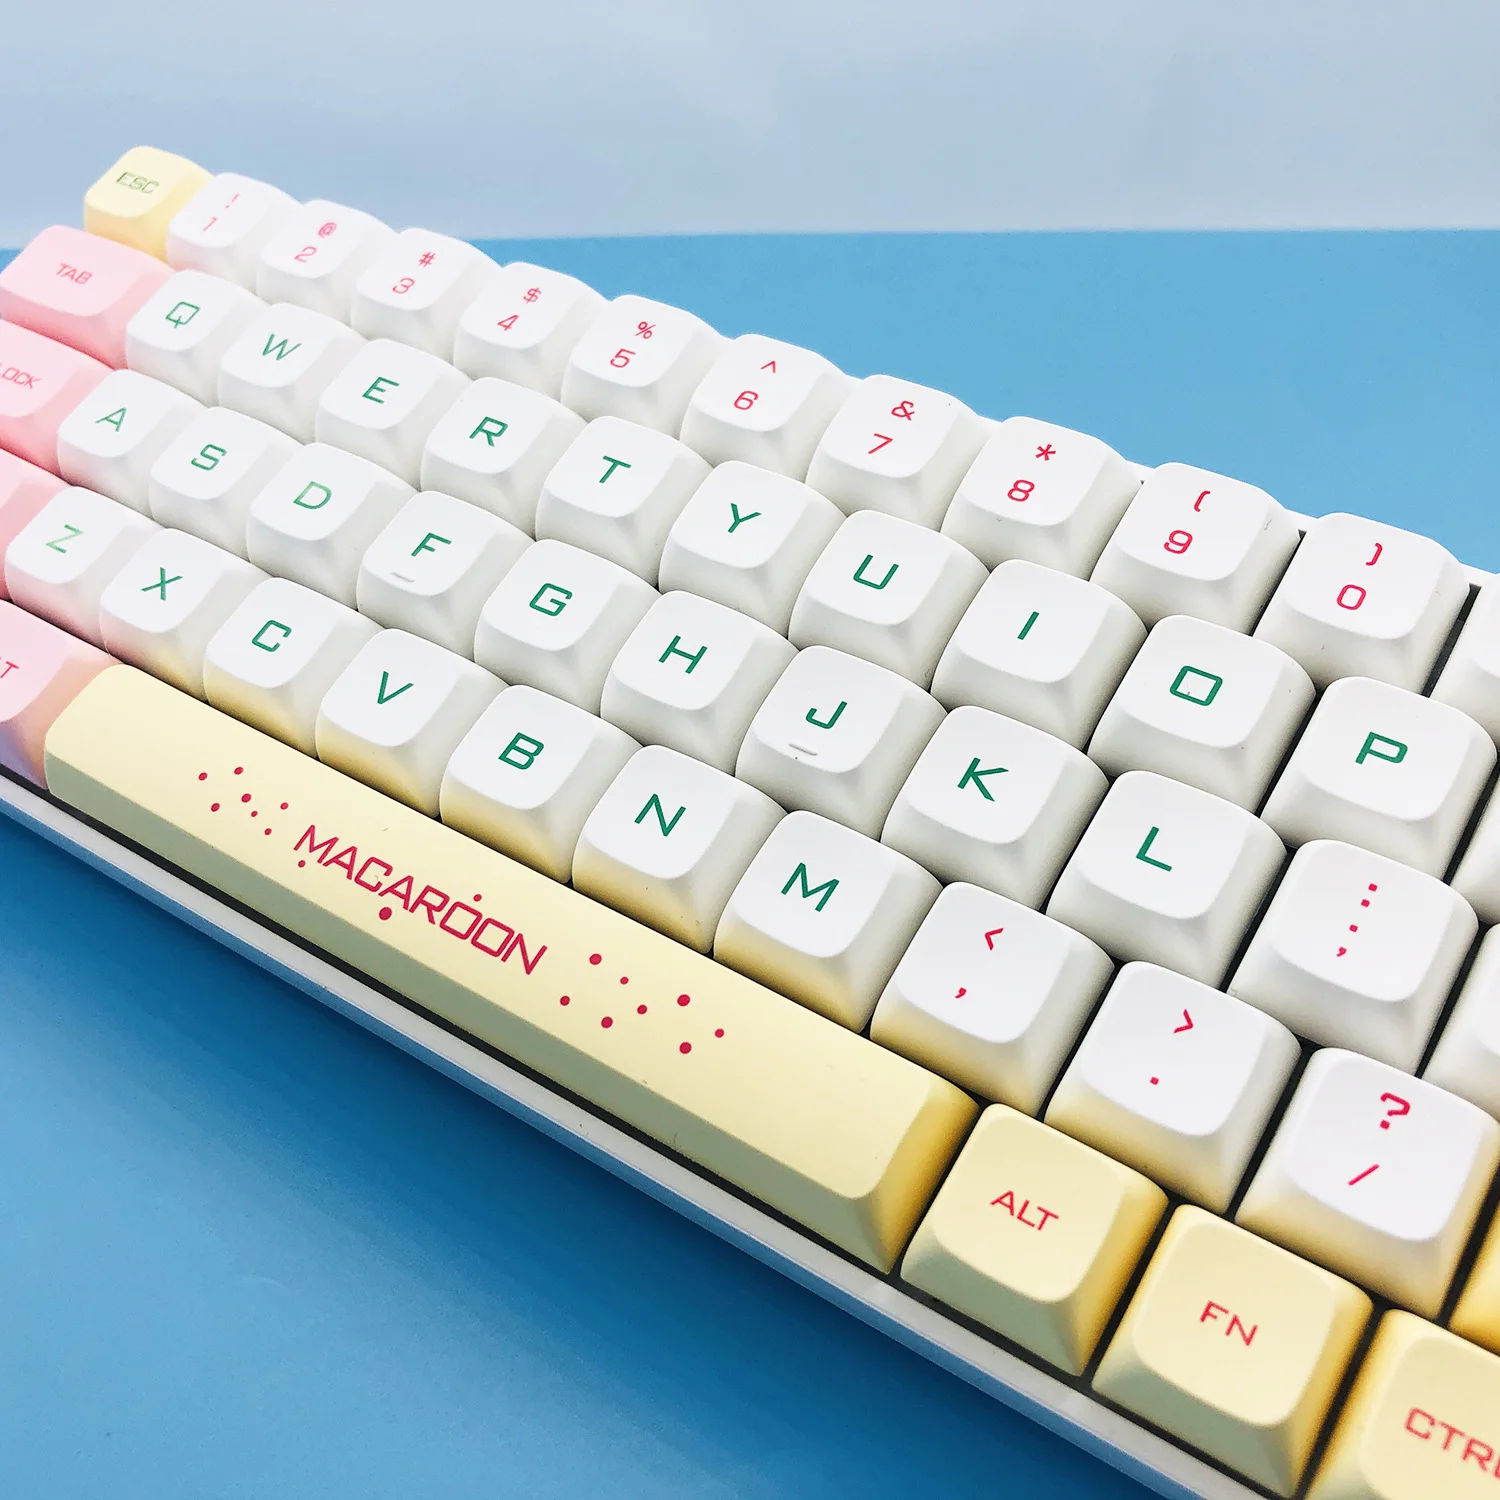 

131 Keys Macaron PBT XDA Profile Keycaps For Cherry MX Switch Mechanical Keyboard Dye Sublimation Cute Pink Key Caps DIY GK61